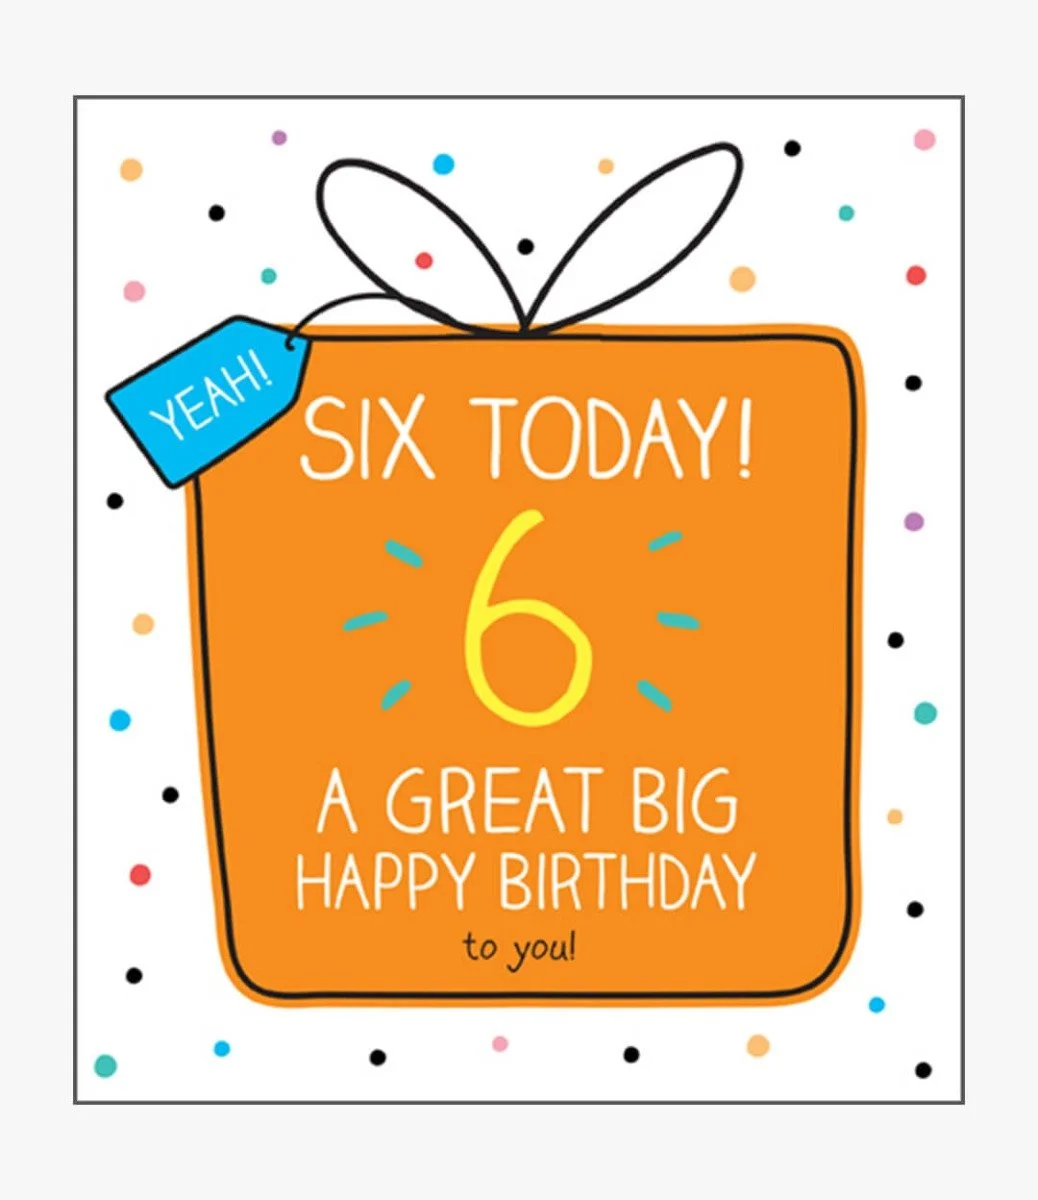 6 Great Big Happy Birthday Greeting Card by Happy Jackson